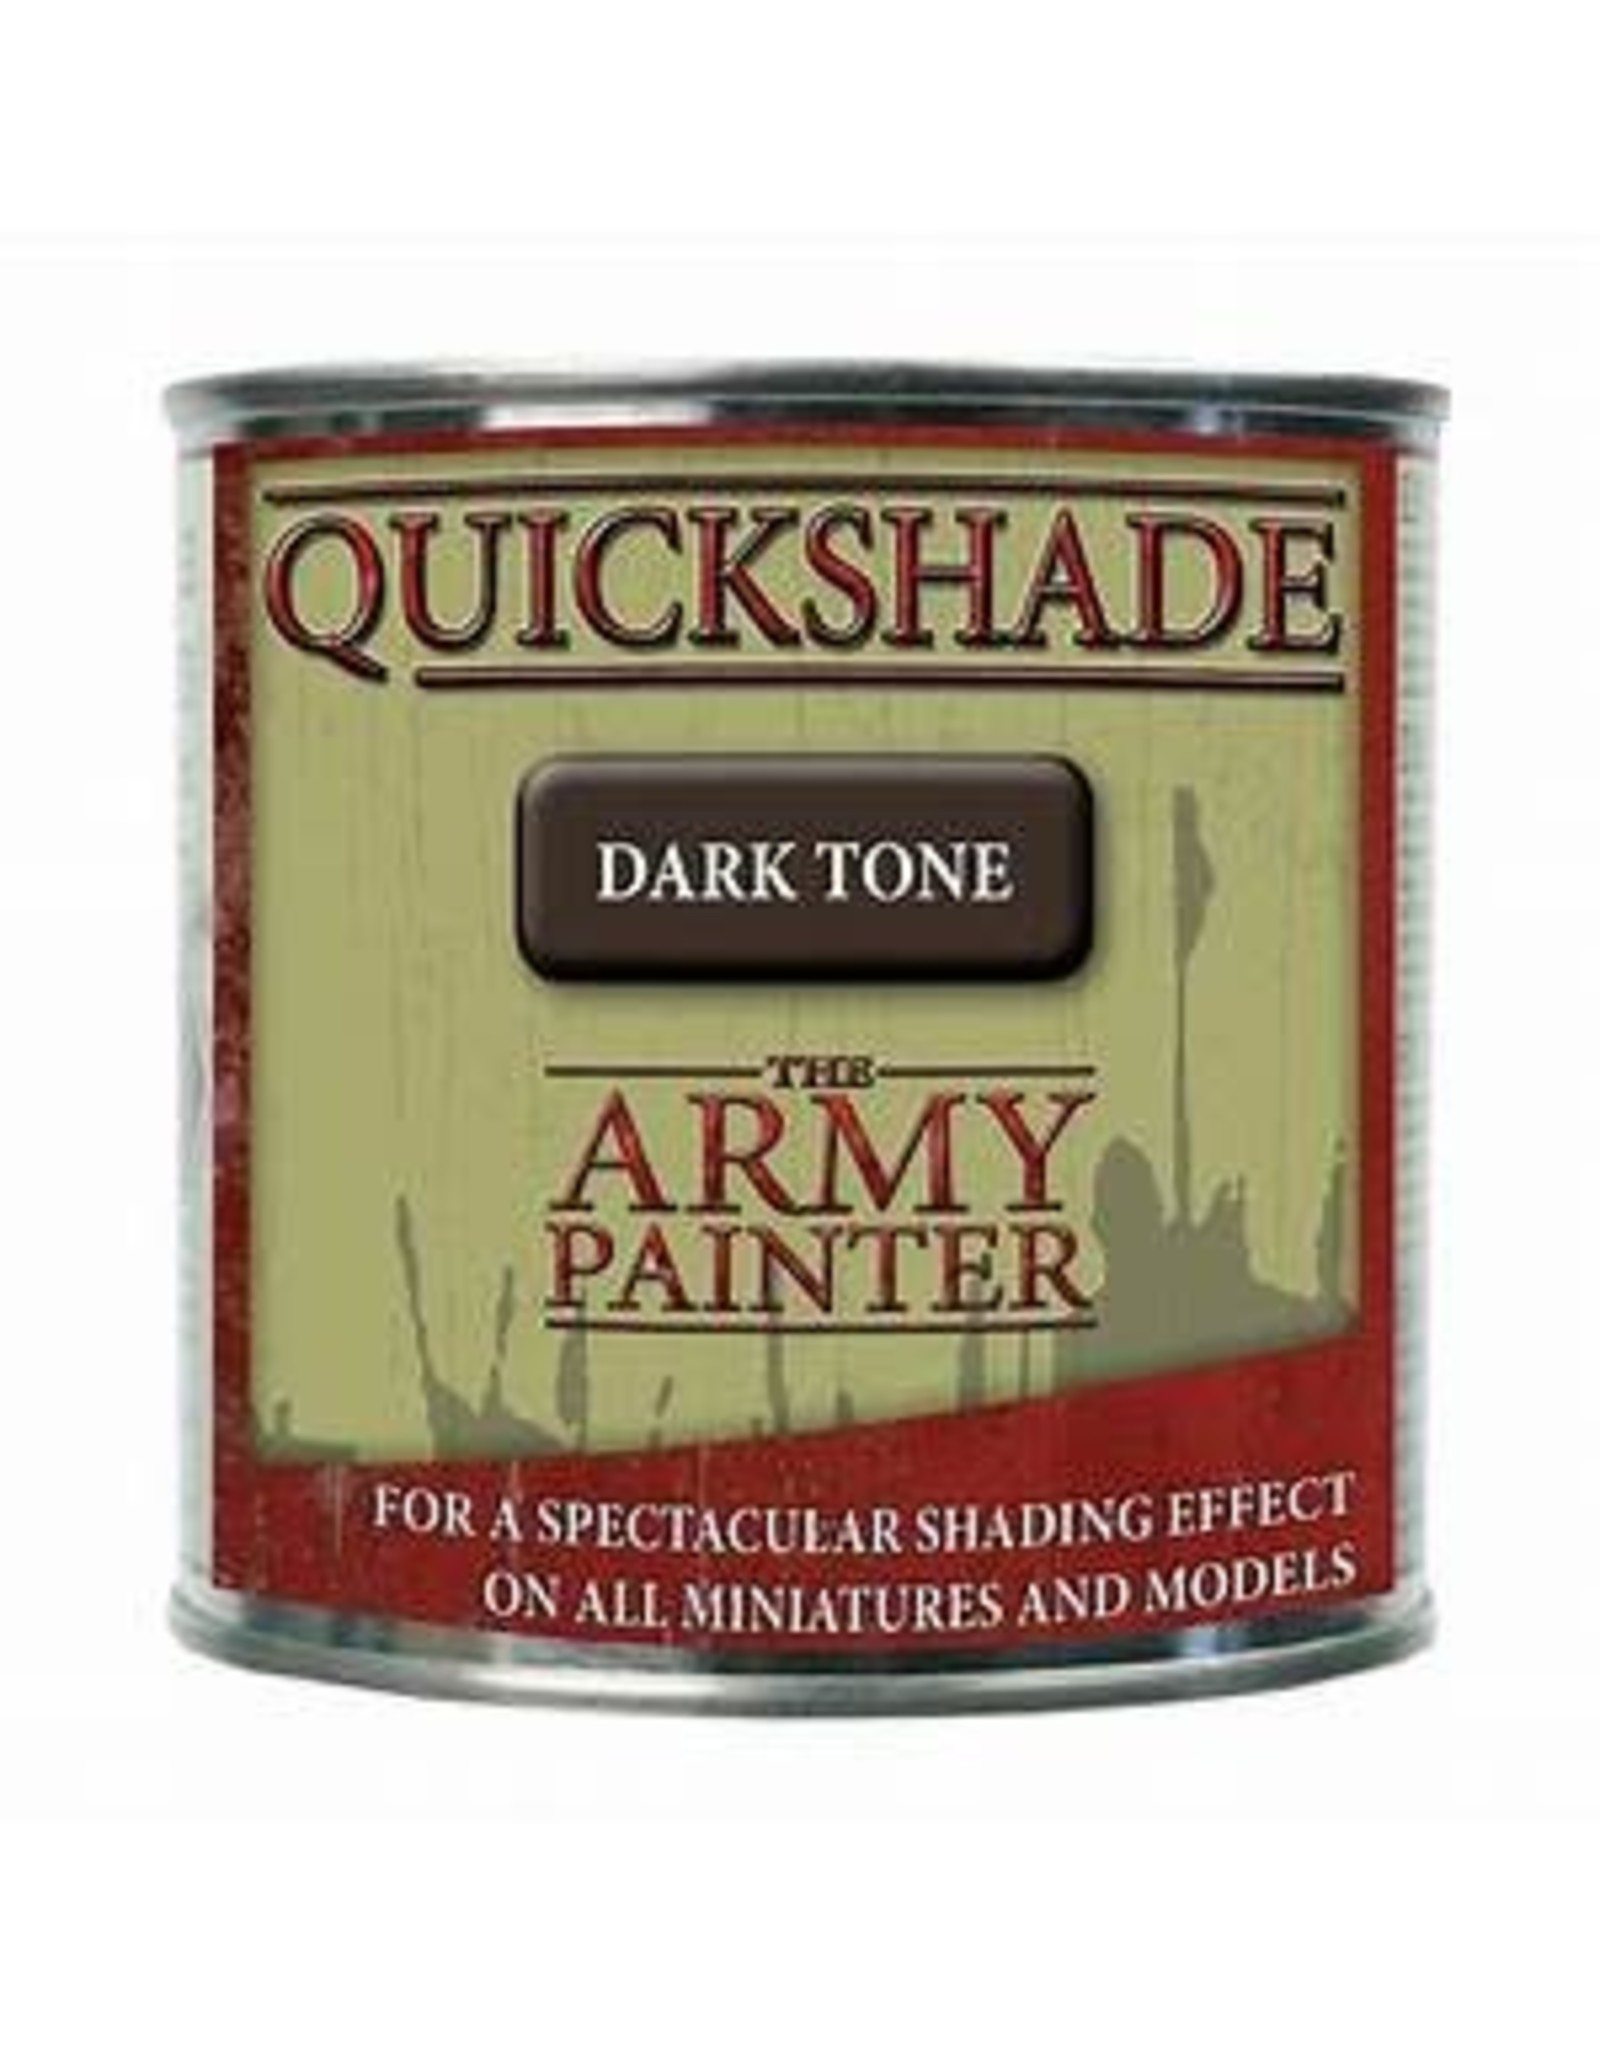 The Army Painter QS1003 Quickshade DarkTone